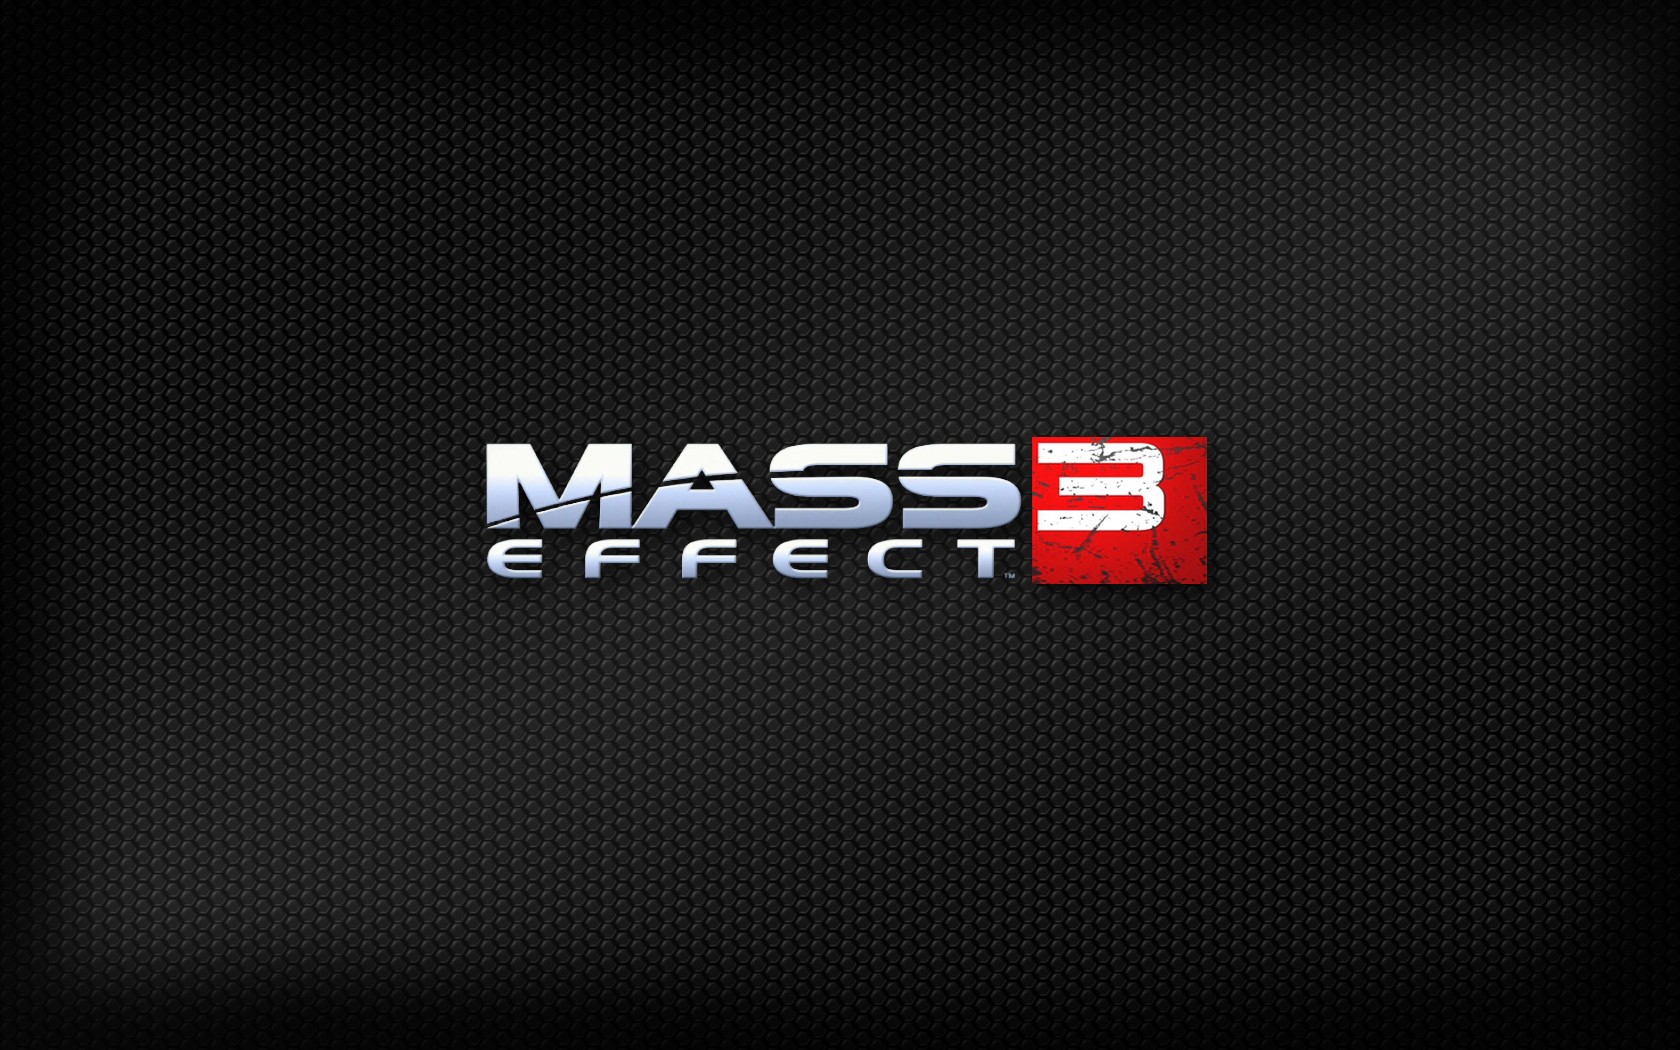 General 1680x1050 Mass Effect Mass Effect 3 logo video games PC gaming